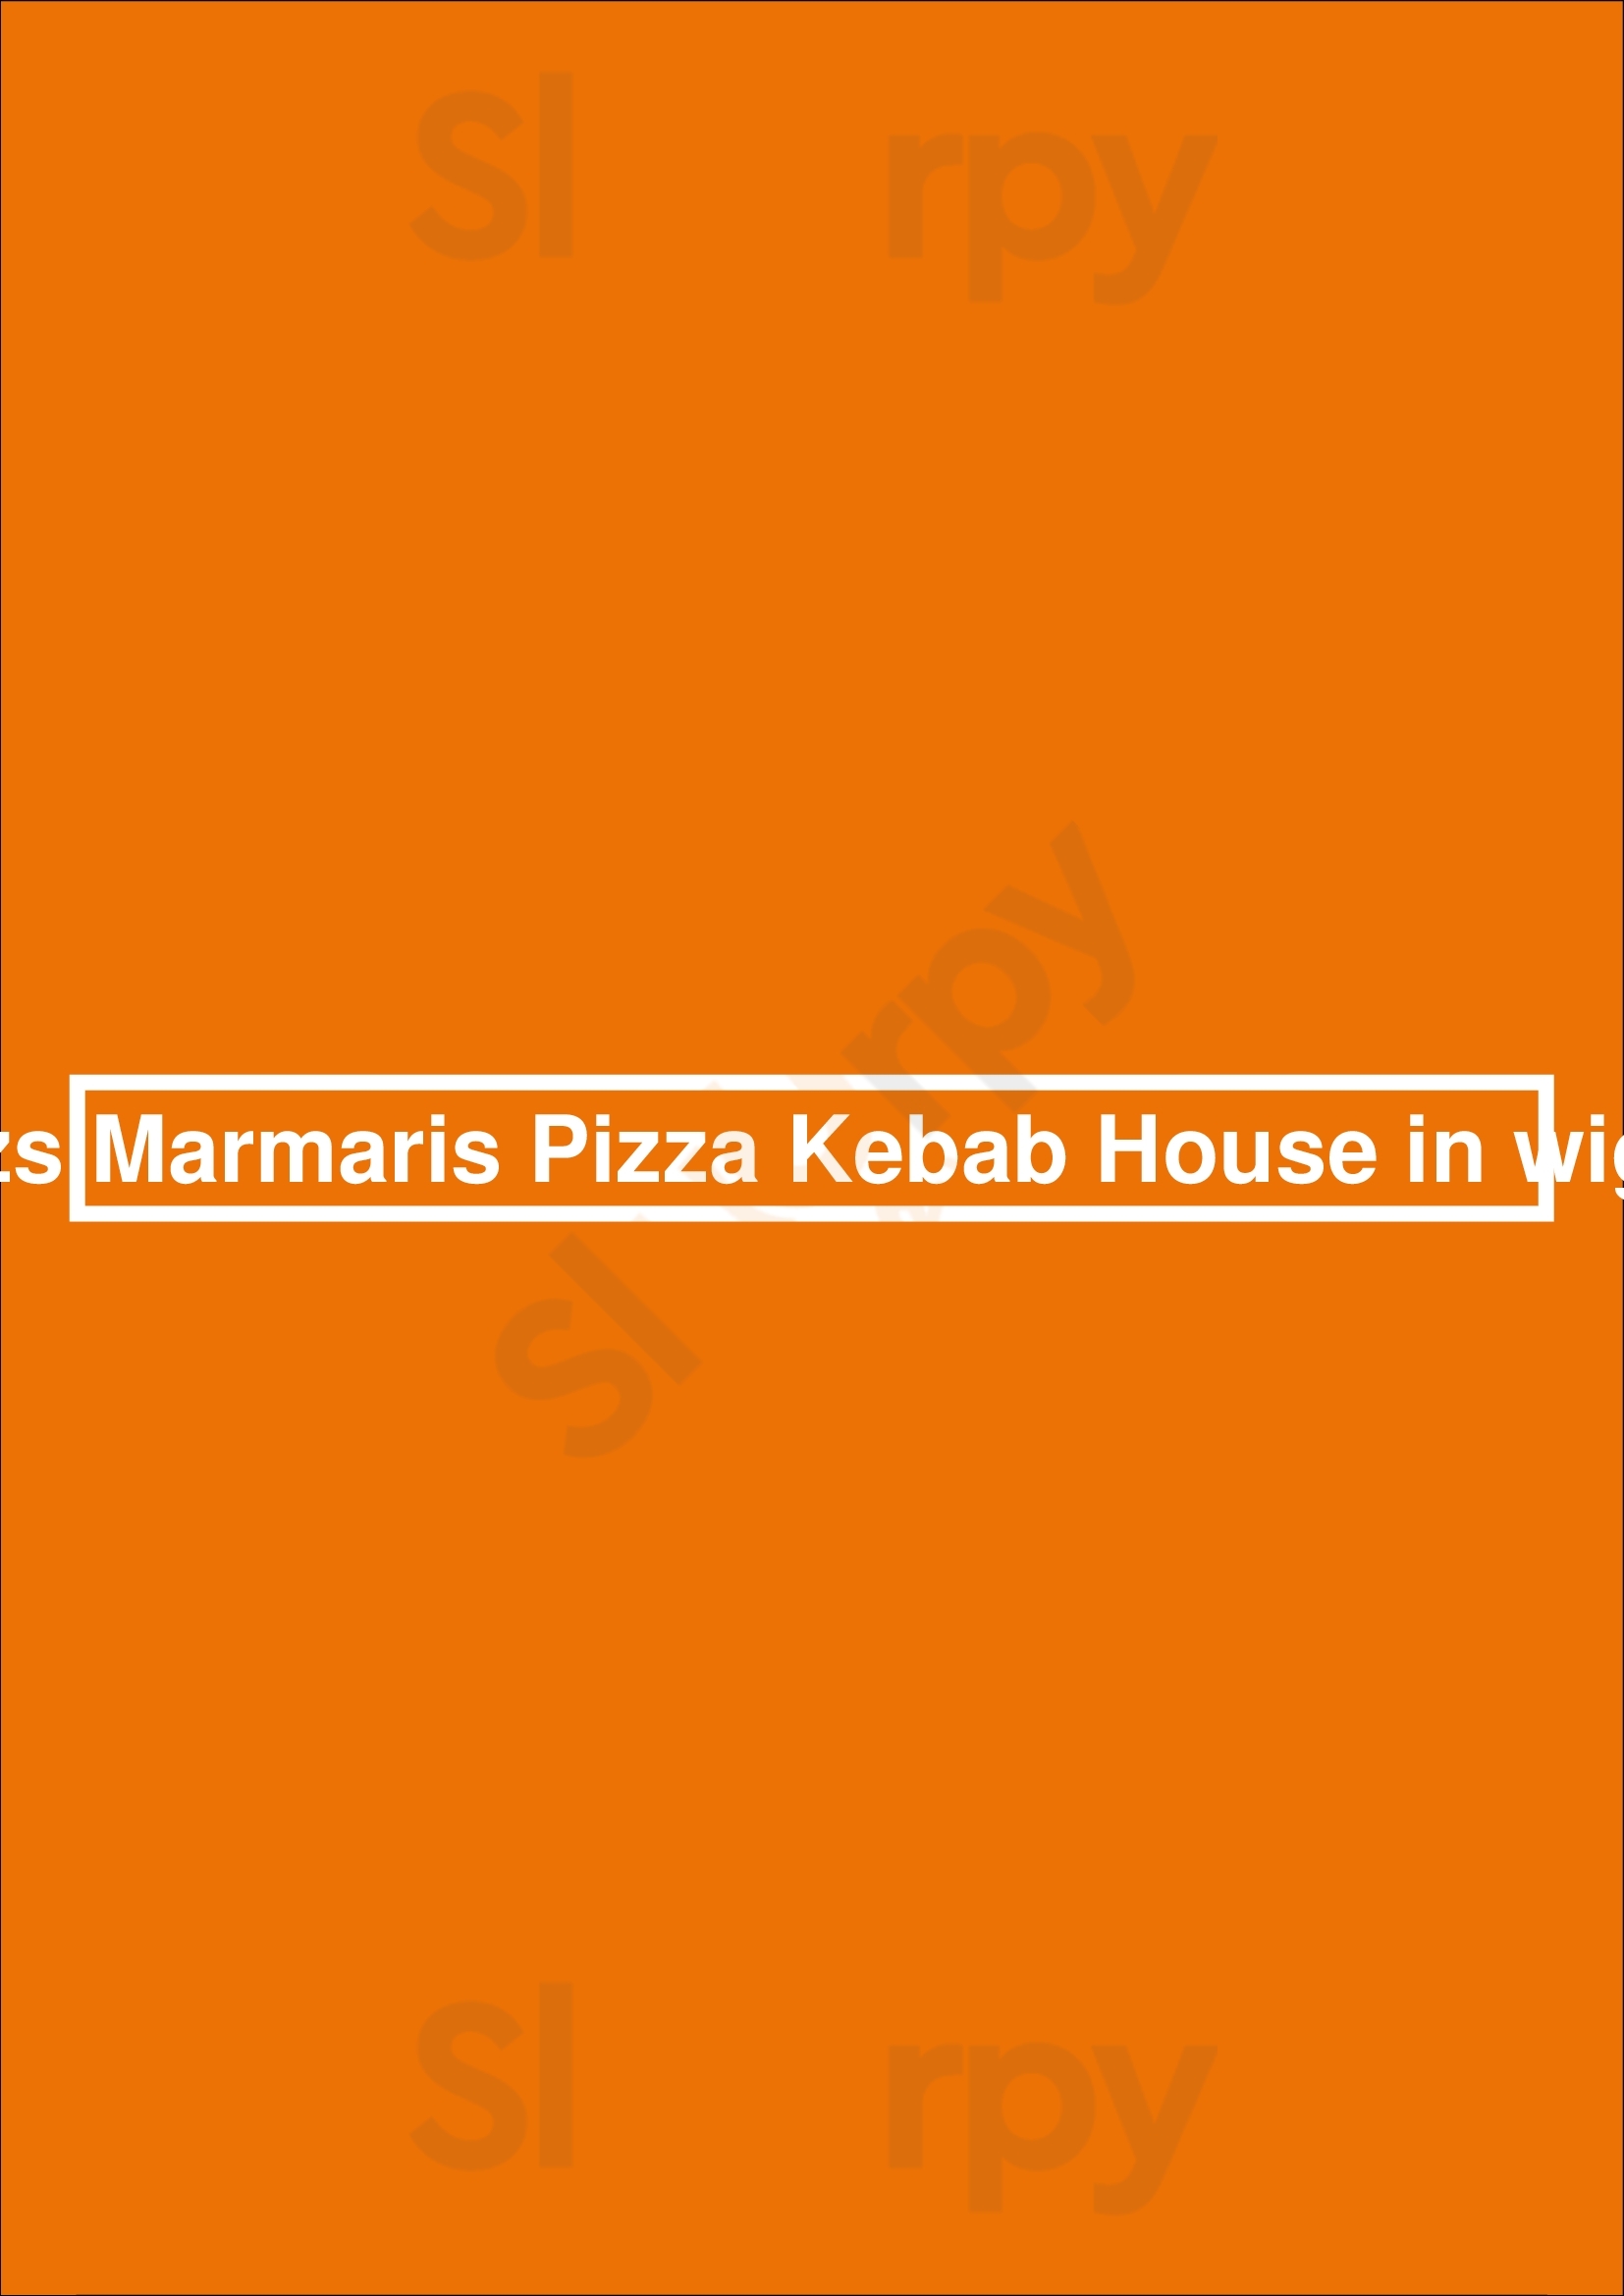 Bazs Marmaris Pizza Kebab House In Wigan Wigan Menu - 1